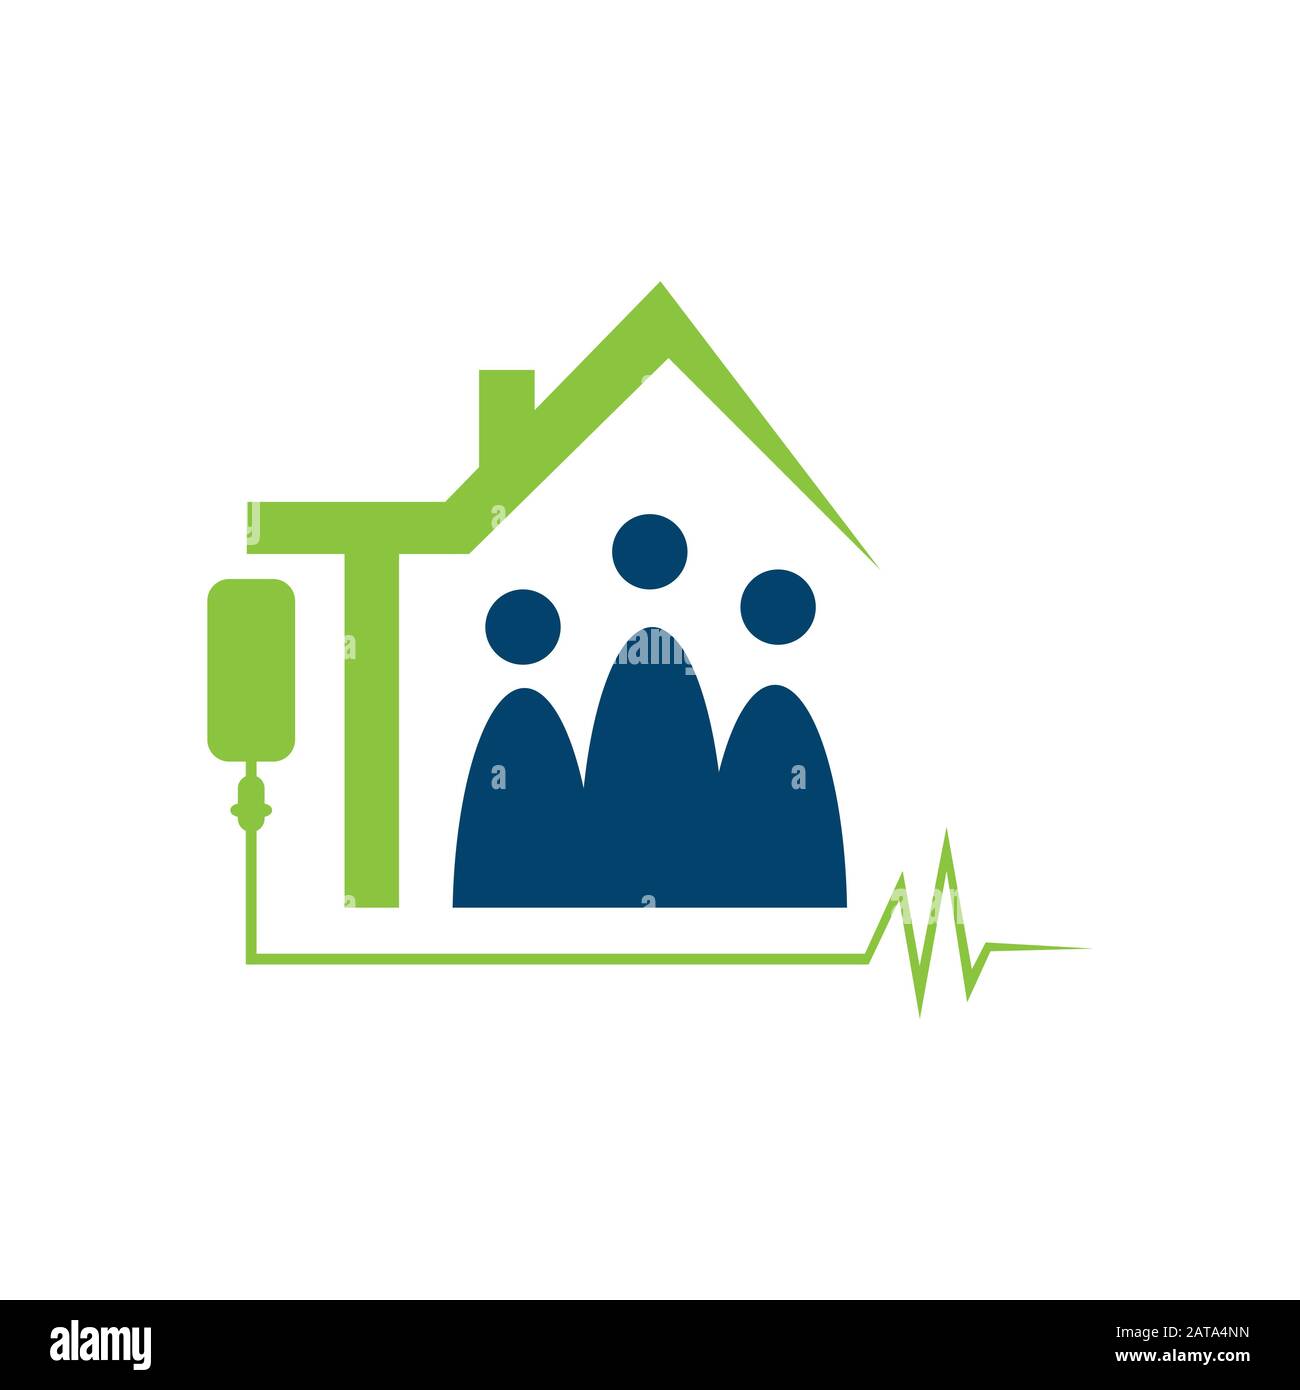 nursing home logo design home care elderly logo vector illustrations Stock Vector